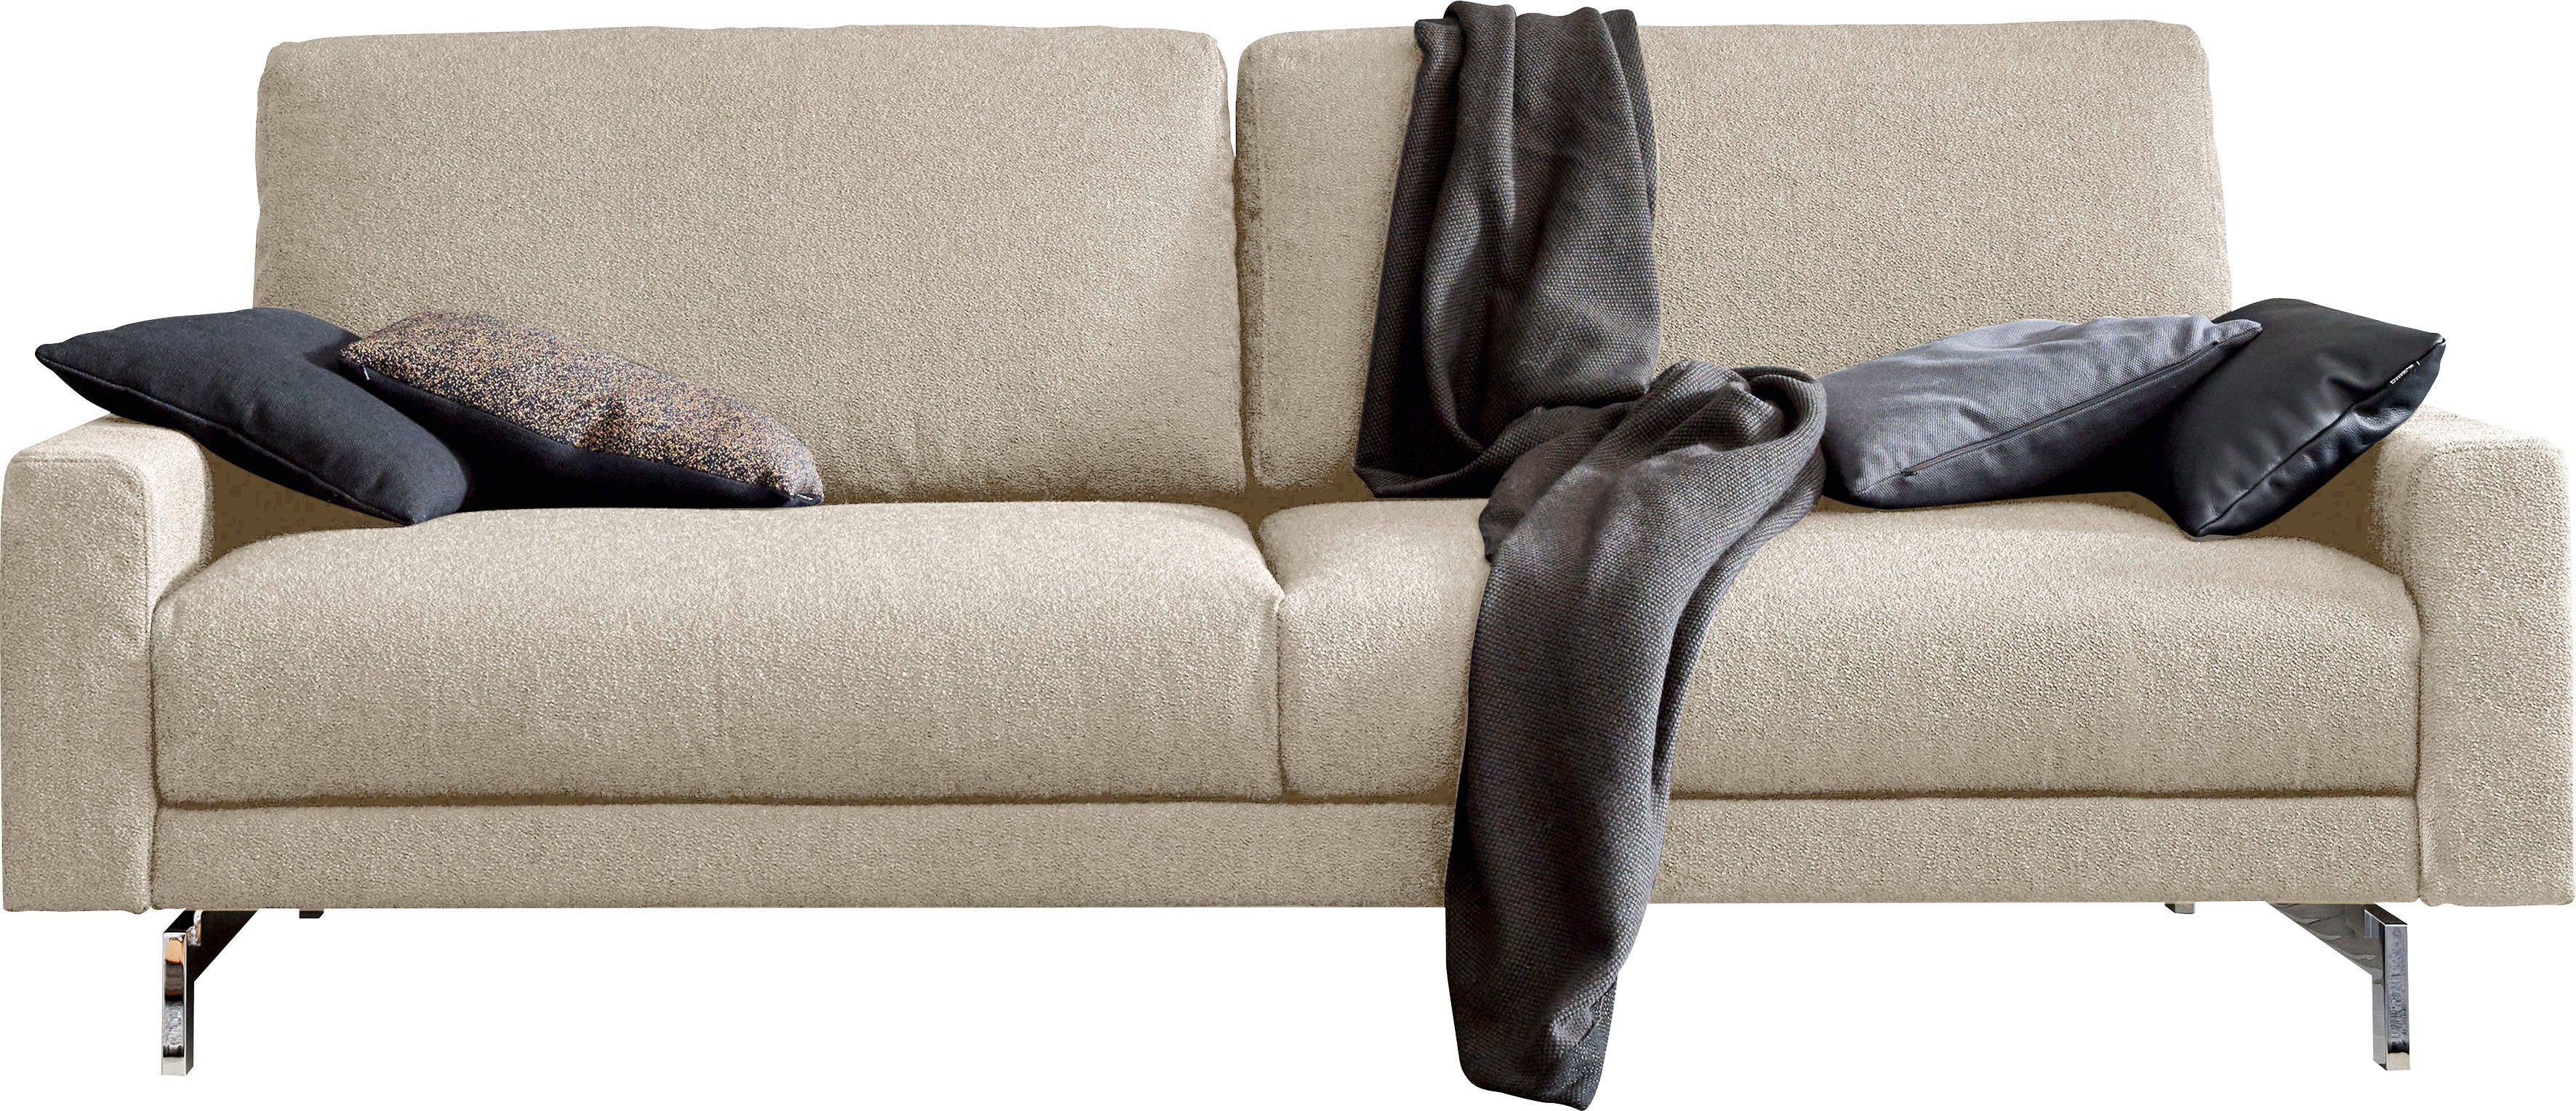 Breite cm 2-Sitzer hülsta chromfarben Armlehne glänzend, hs.450, niedrig, 164 sofa Fuß